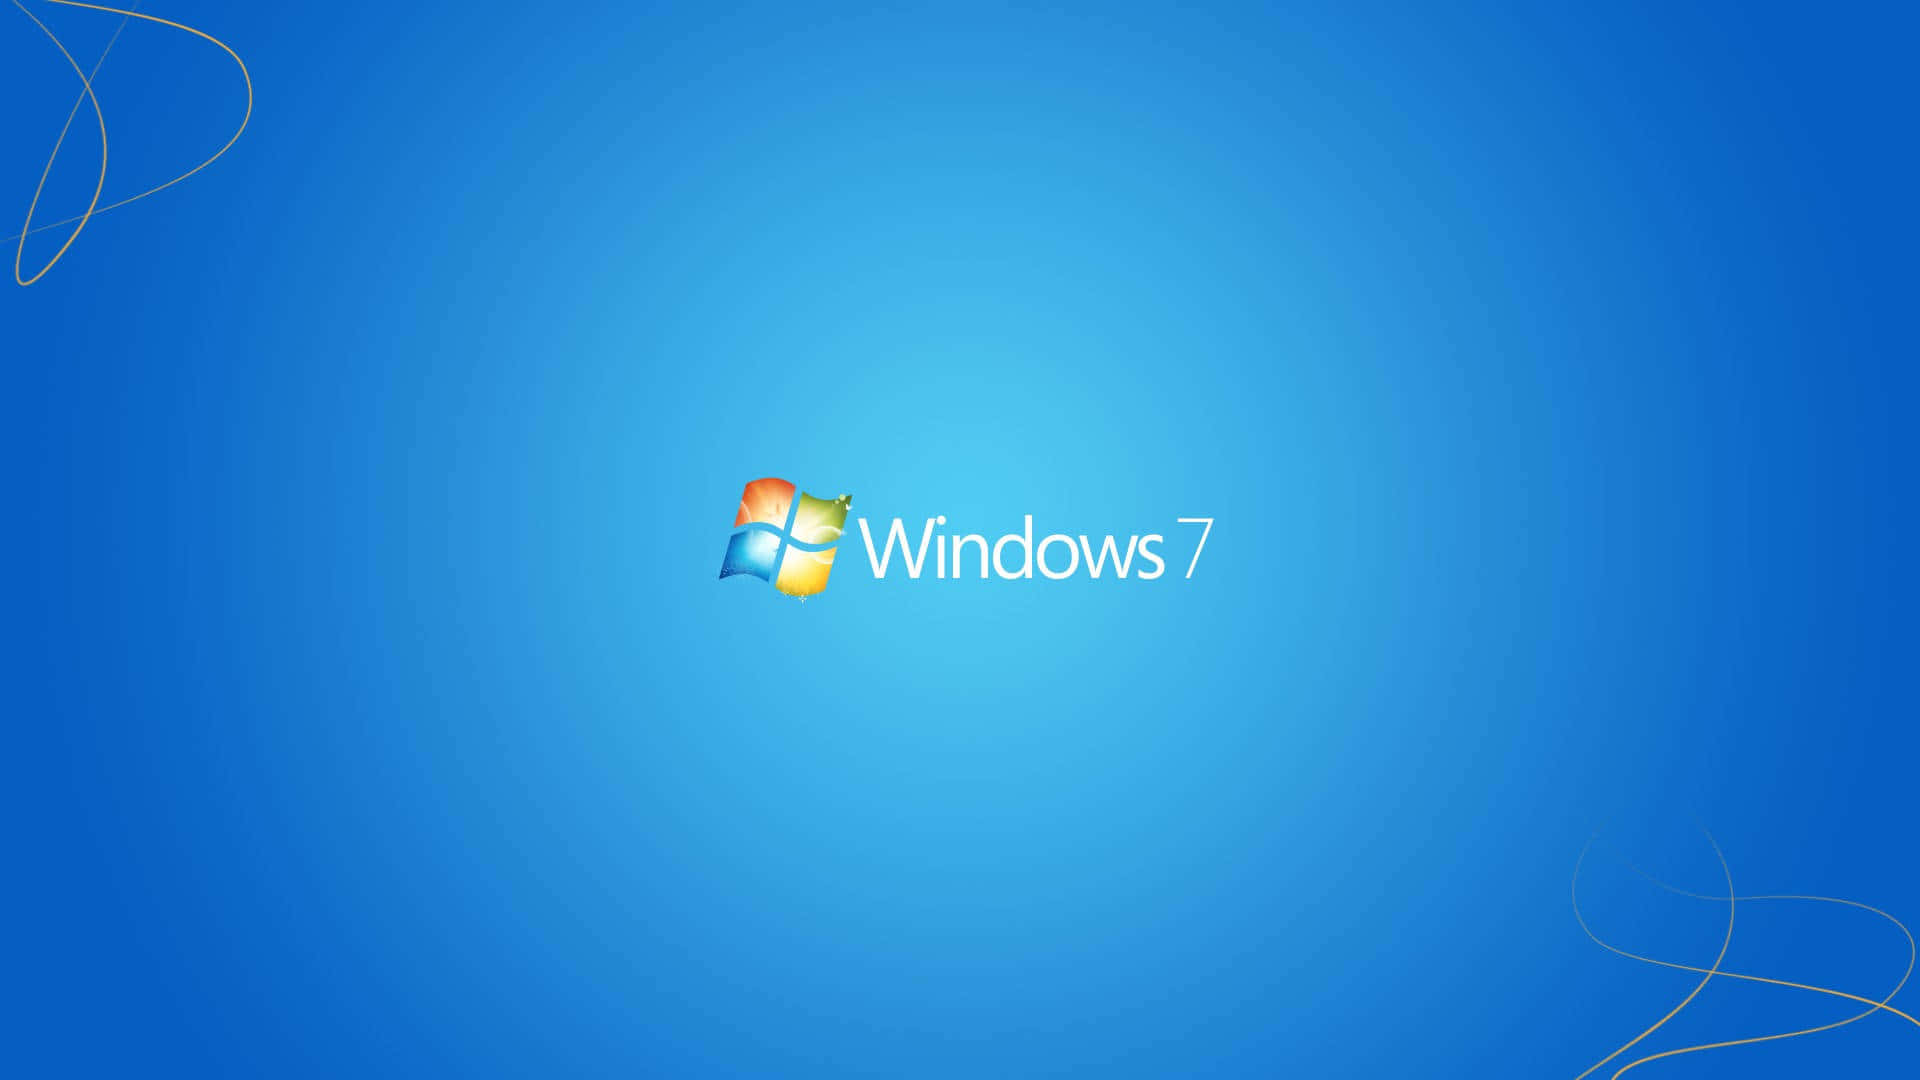 Windows 7 Background Photos